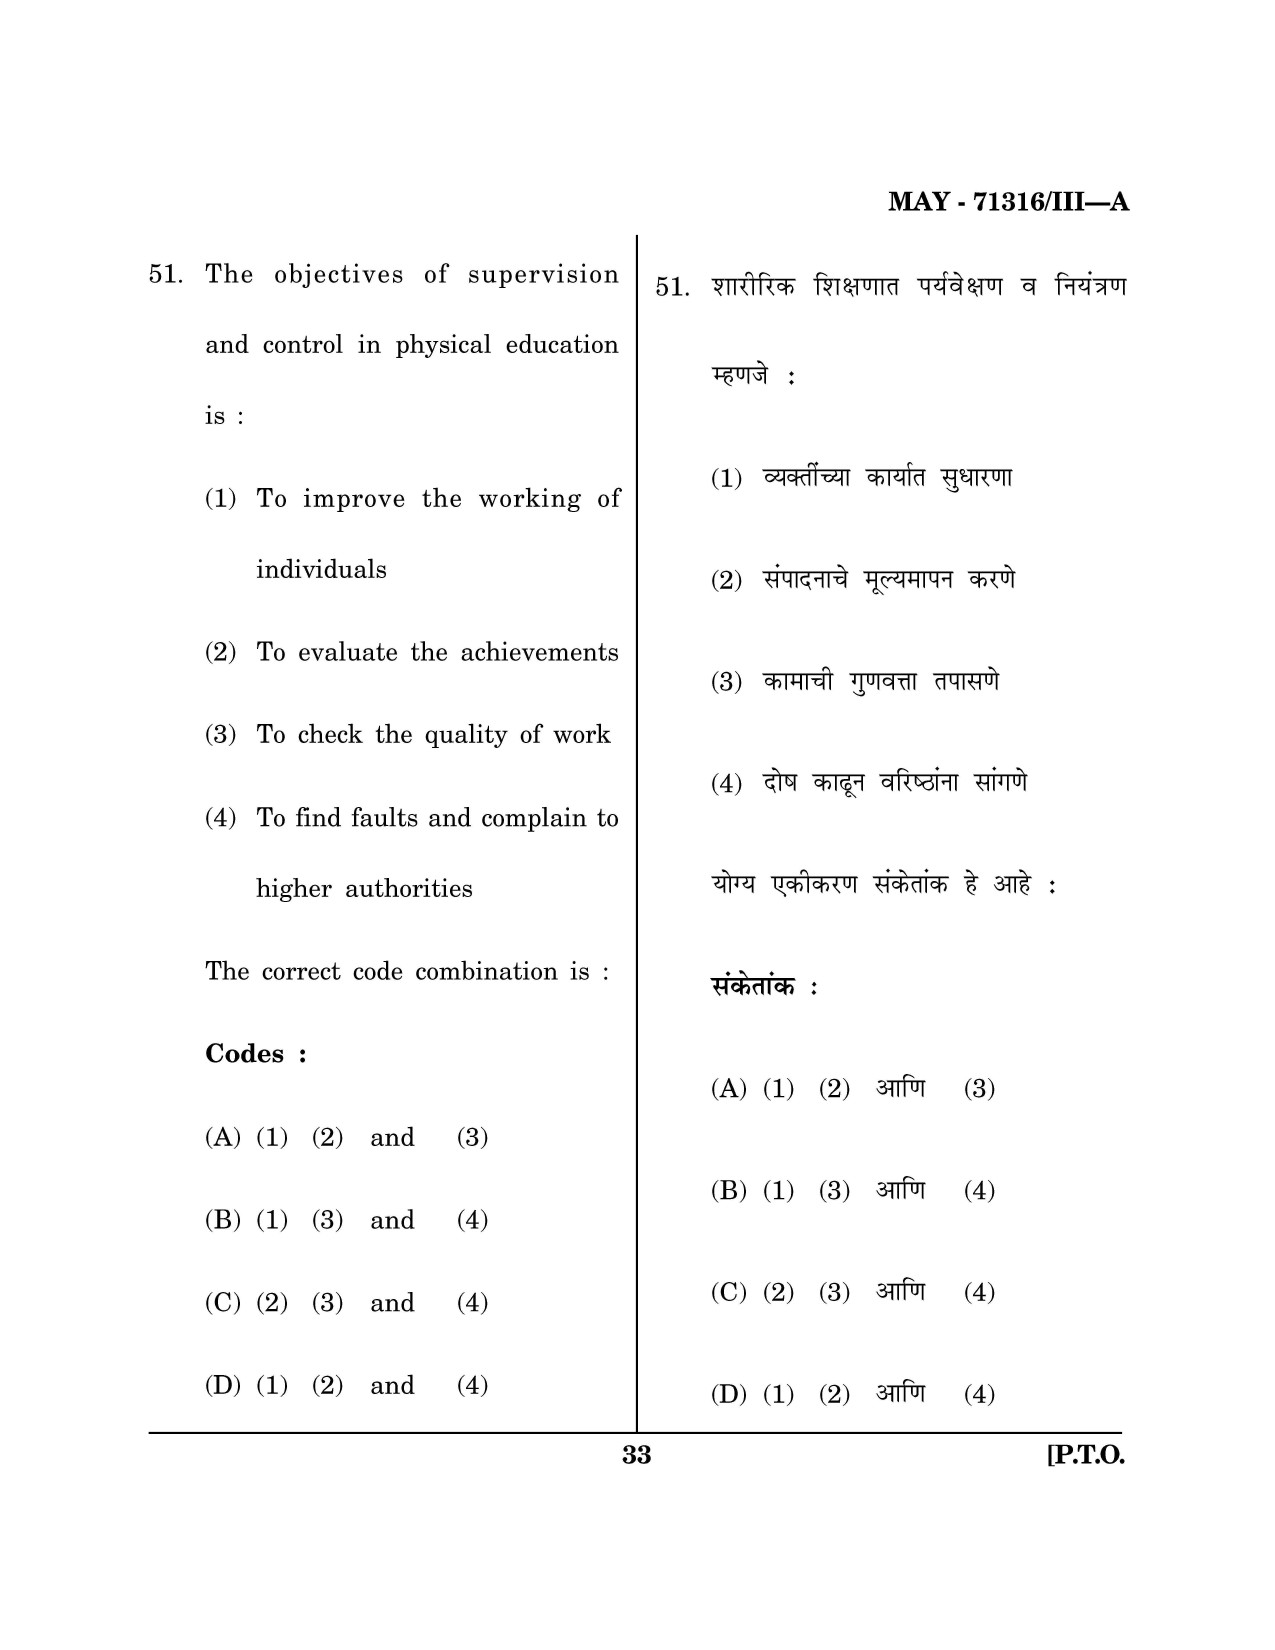 Maharashtra SET Physical Education Question Paper III May 2016 32